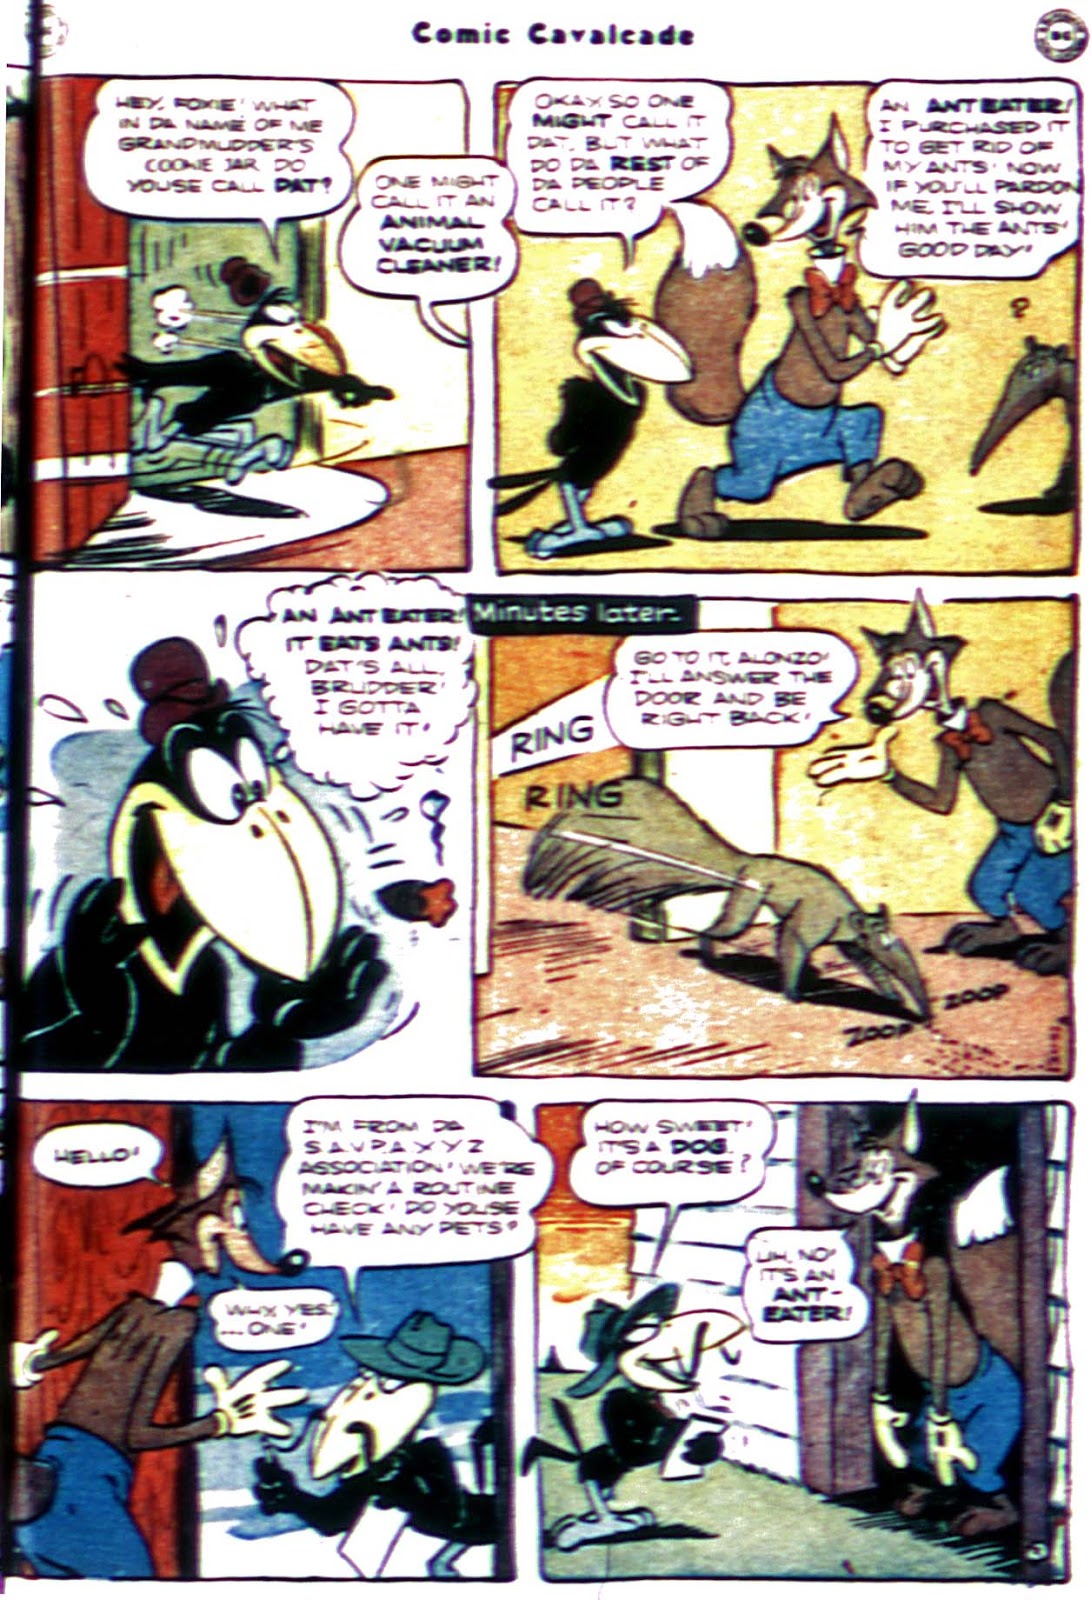 Comic Cavalcade issue 30 - Page 5